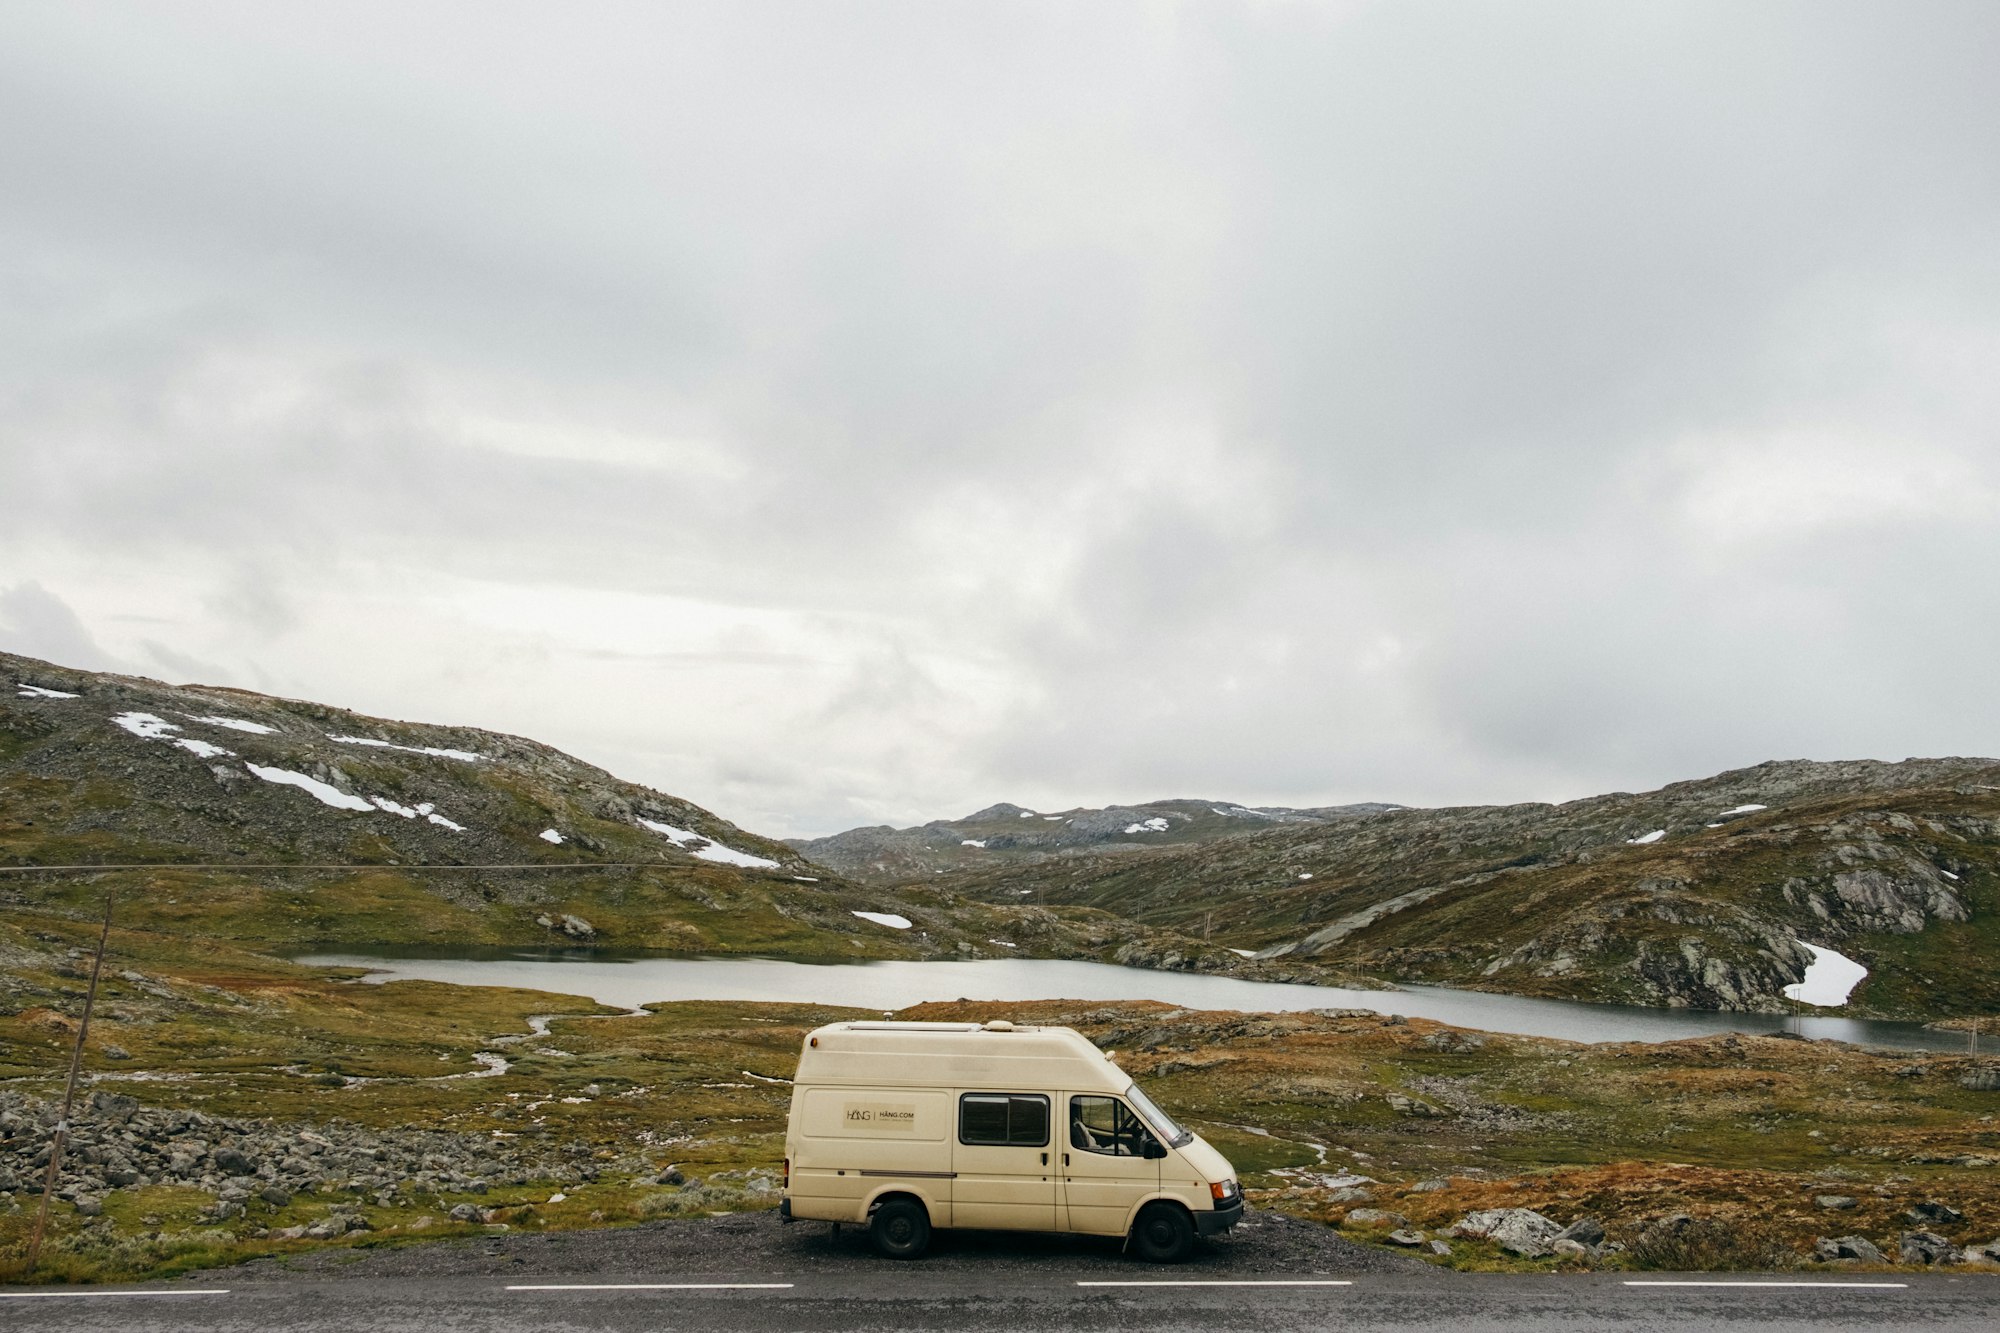 white camper rental van on green grass field under white cloudy sky during daytime